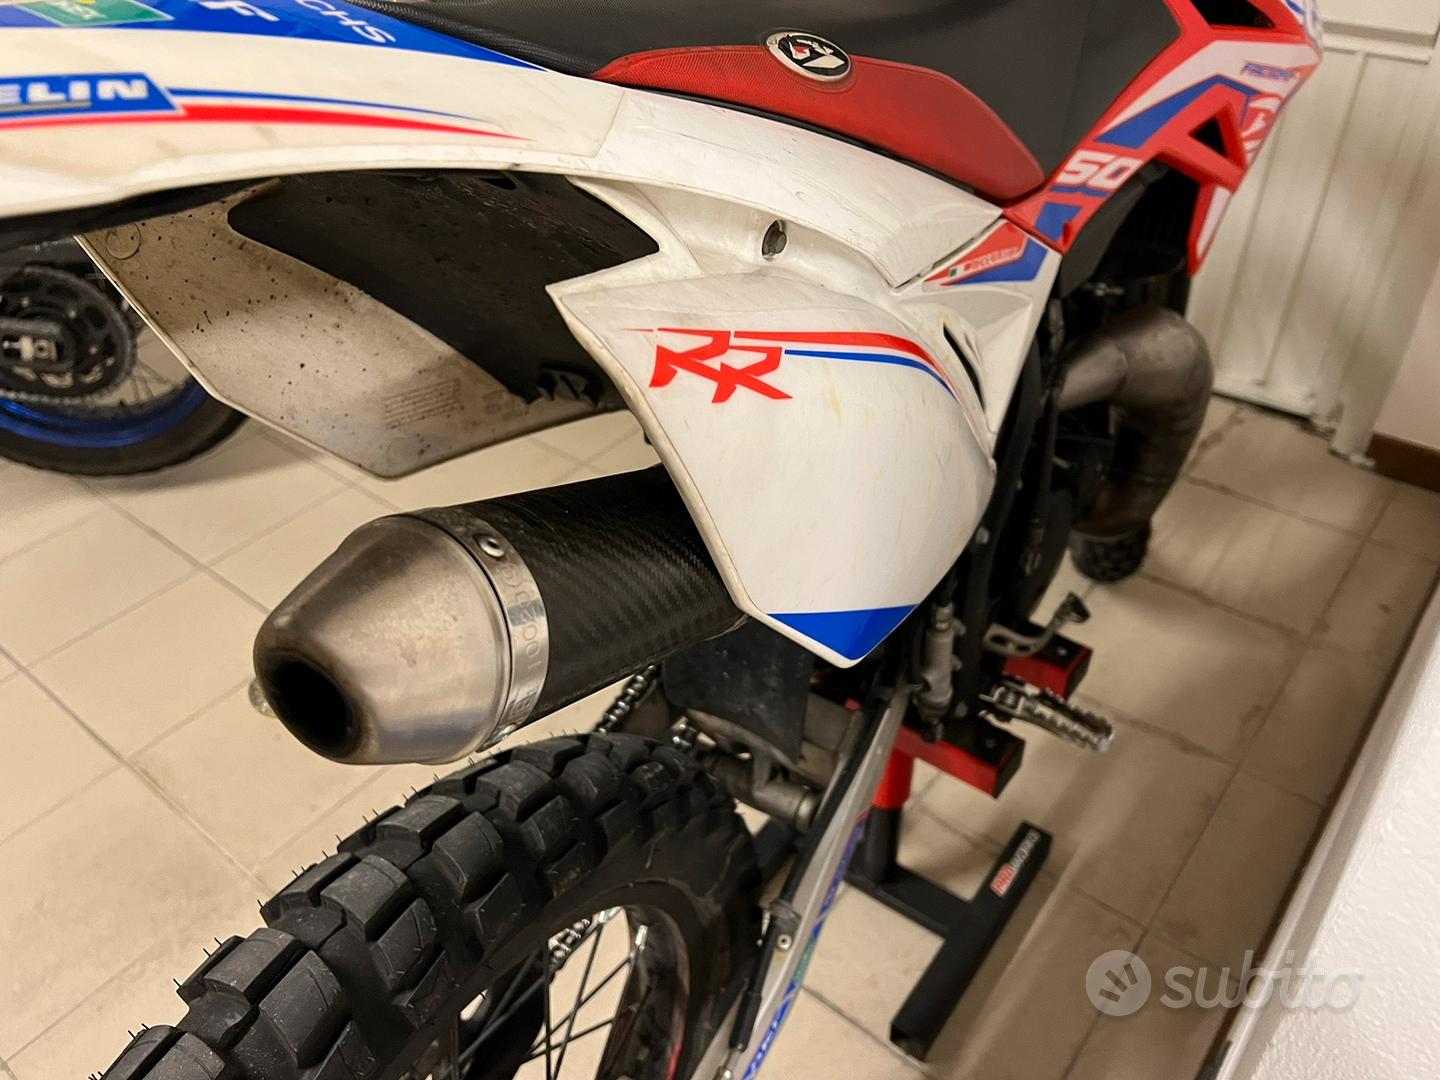 Beta rr 50 sport - Moto e Scooter In vendita a Vicenza